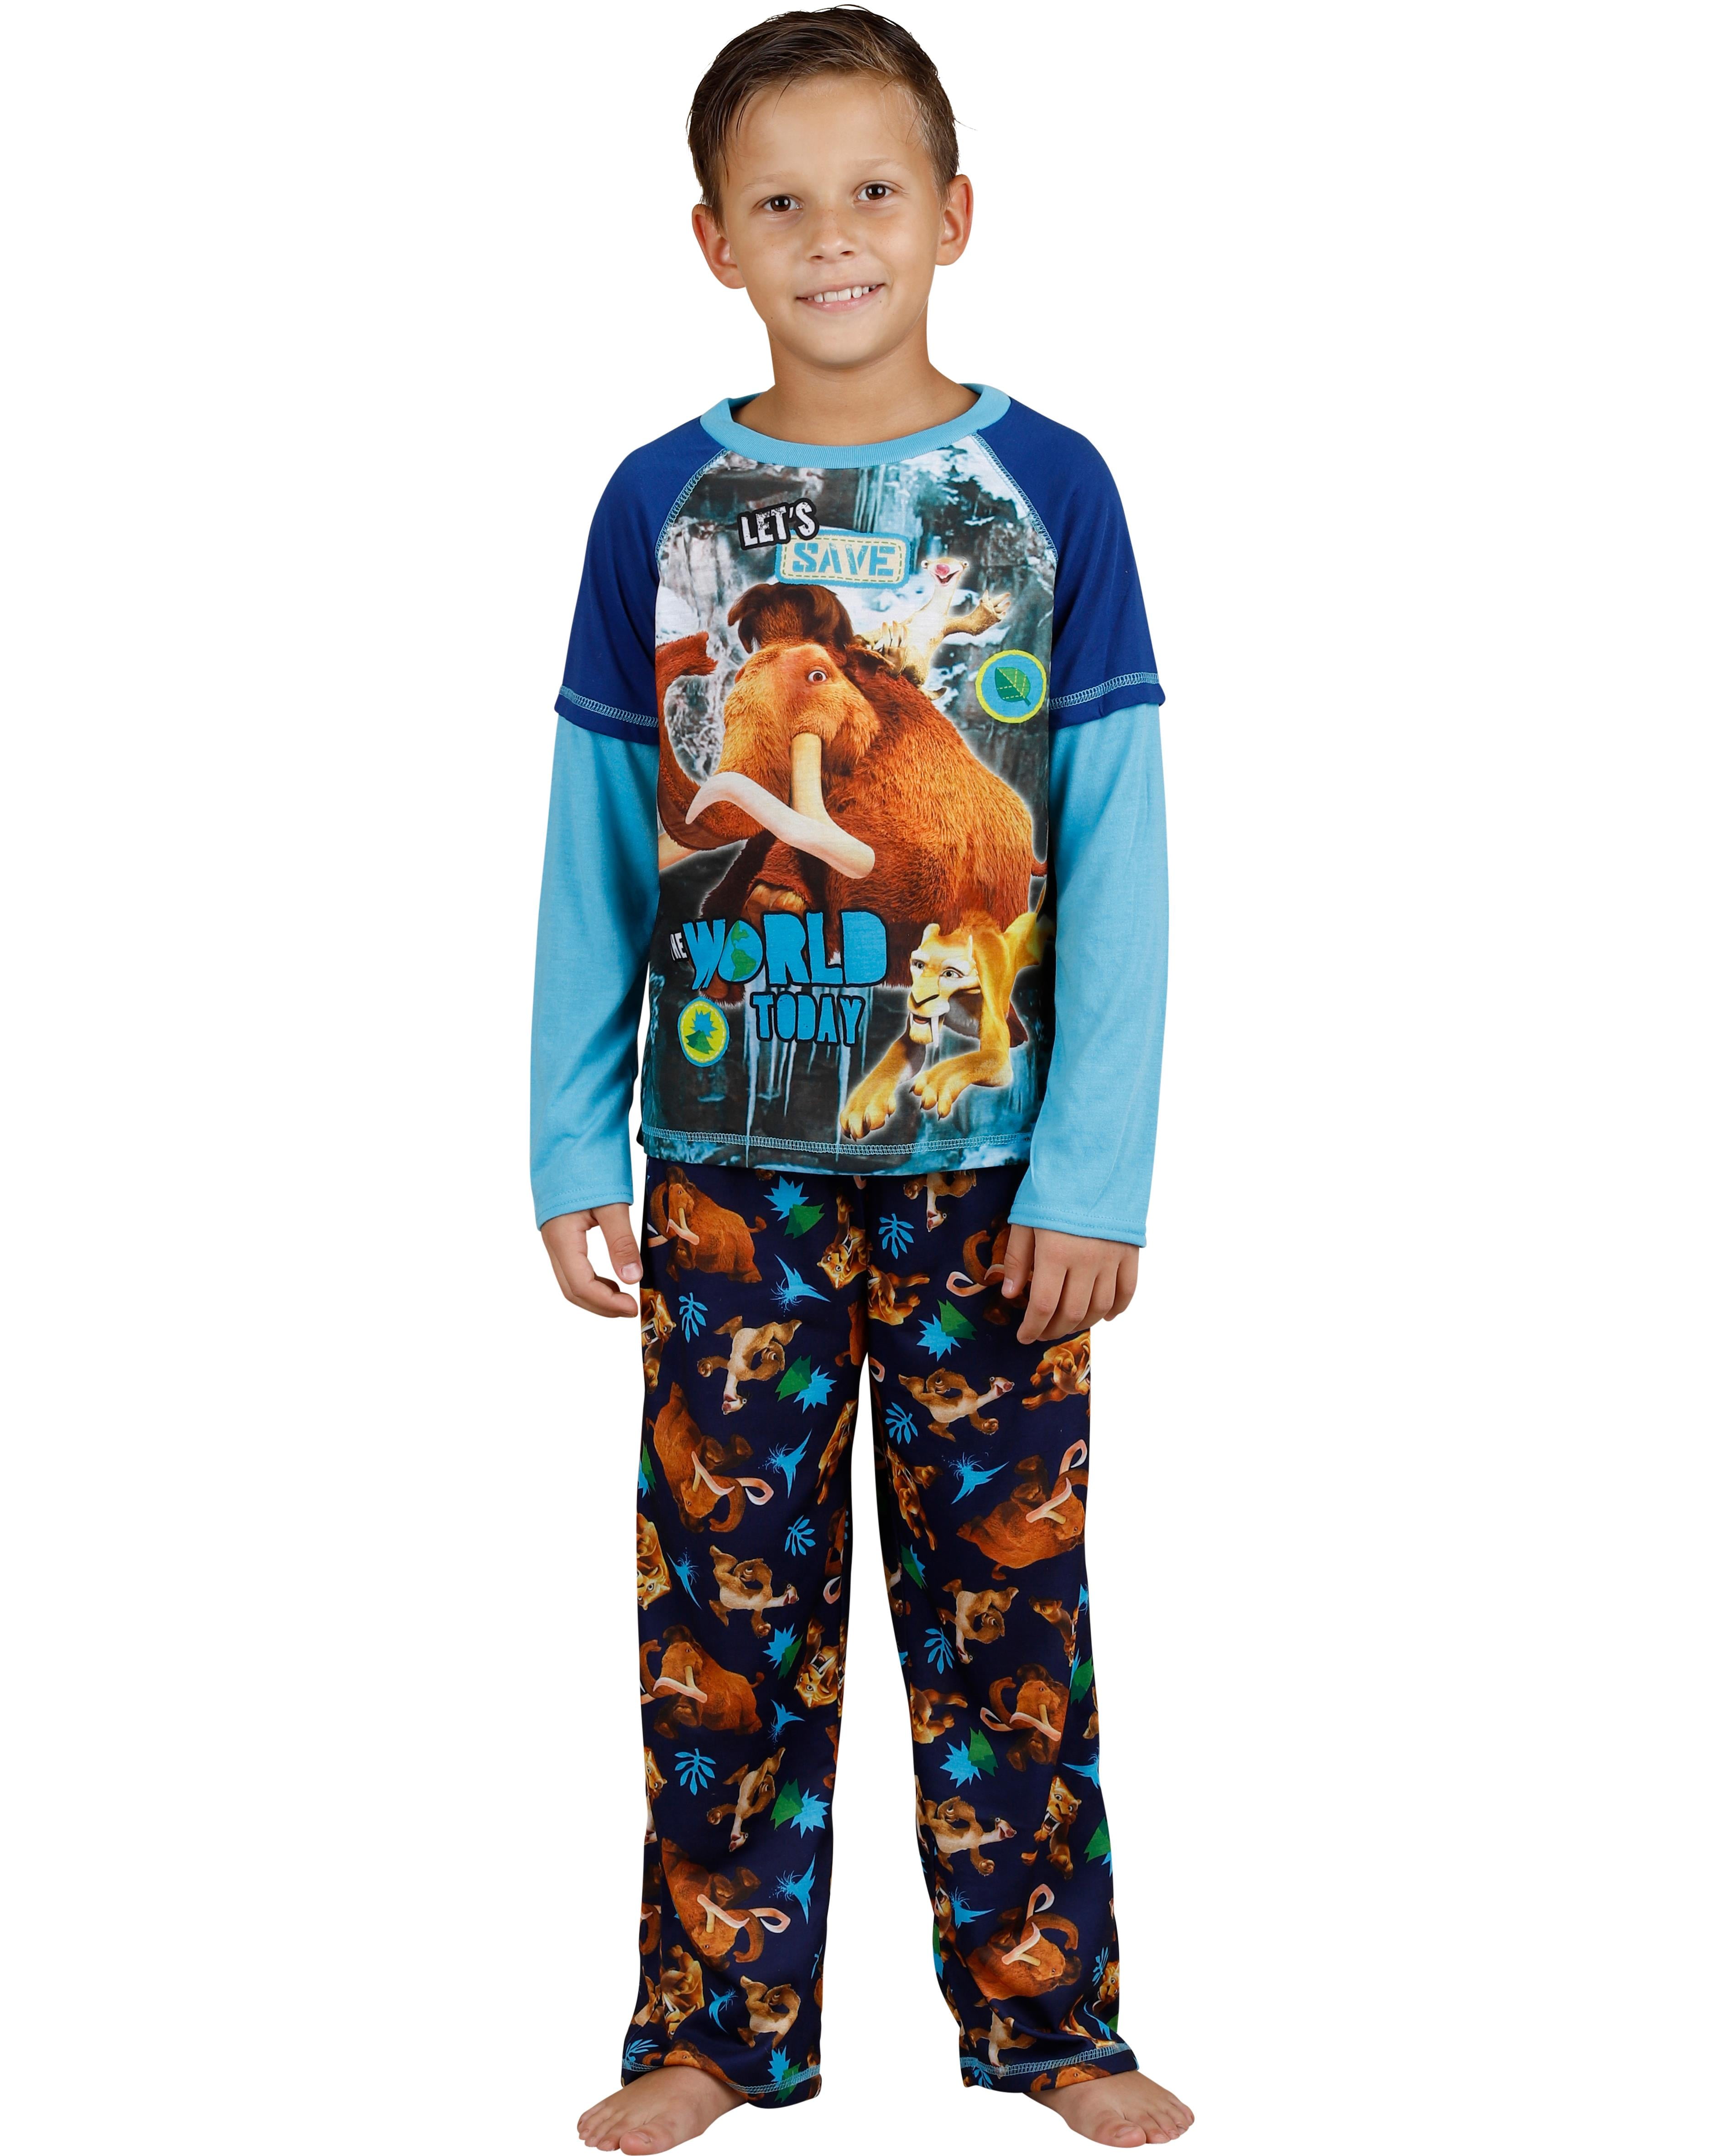 Boys Pajamas Toddler Dinosaur Sleepwear Kids Space Pjs Children Cotton Clothes Pants Set